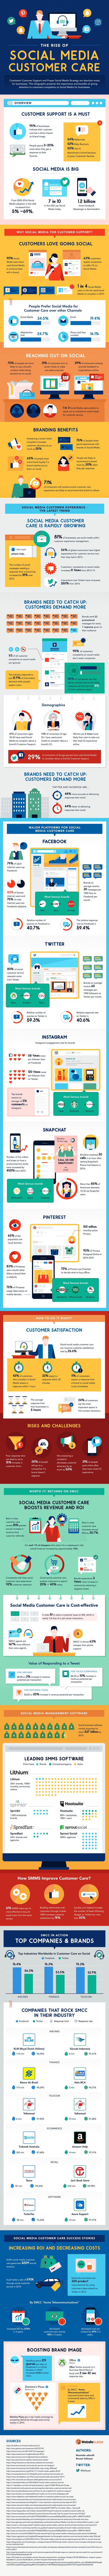 social media customer care infographic